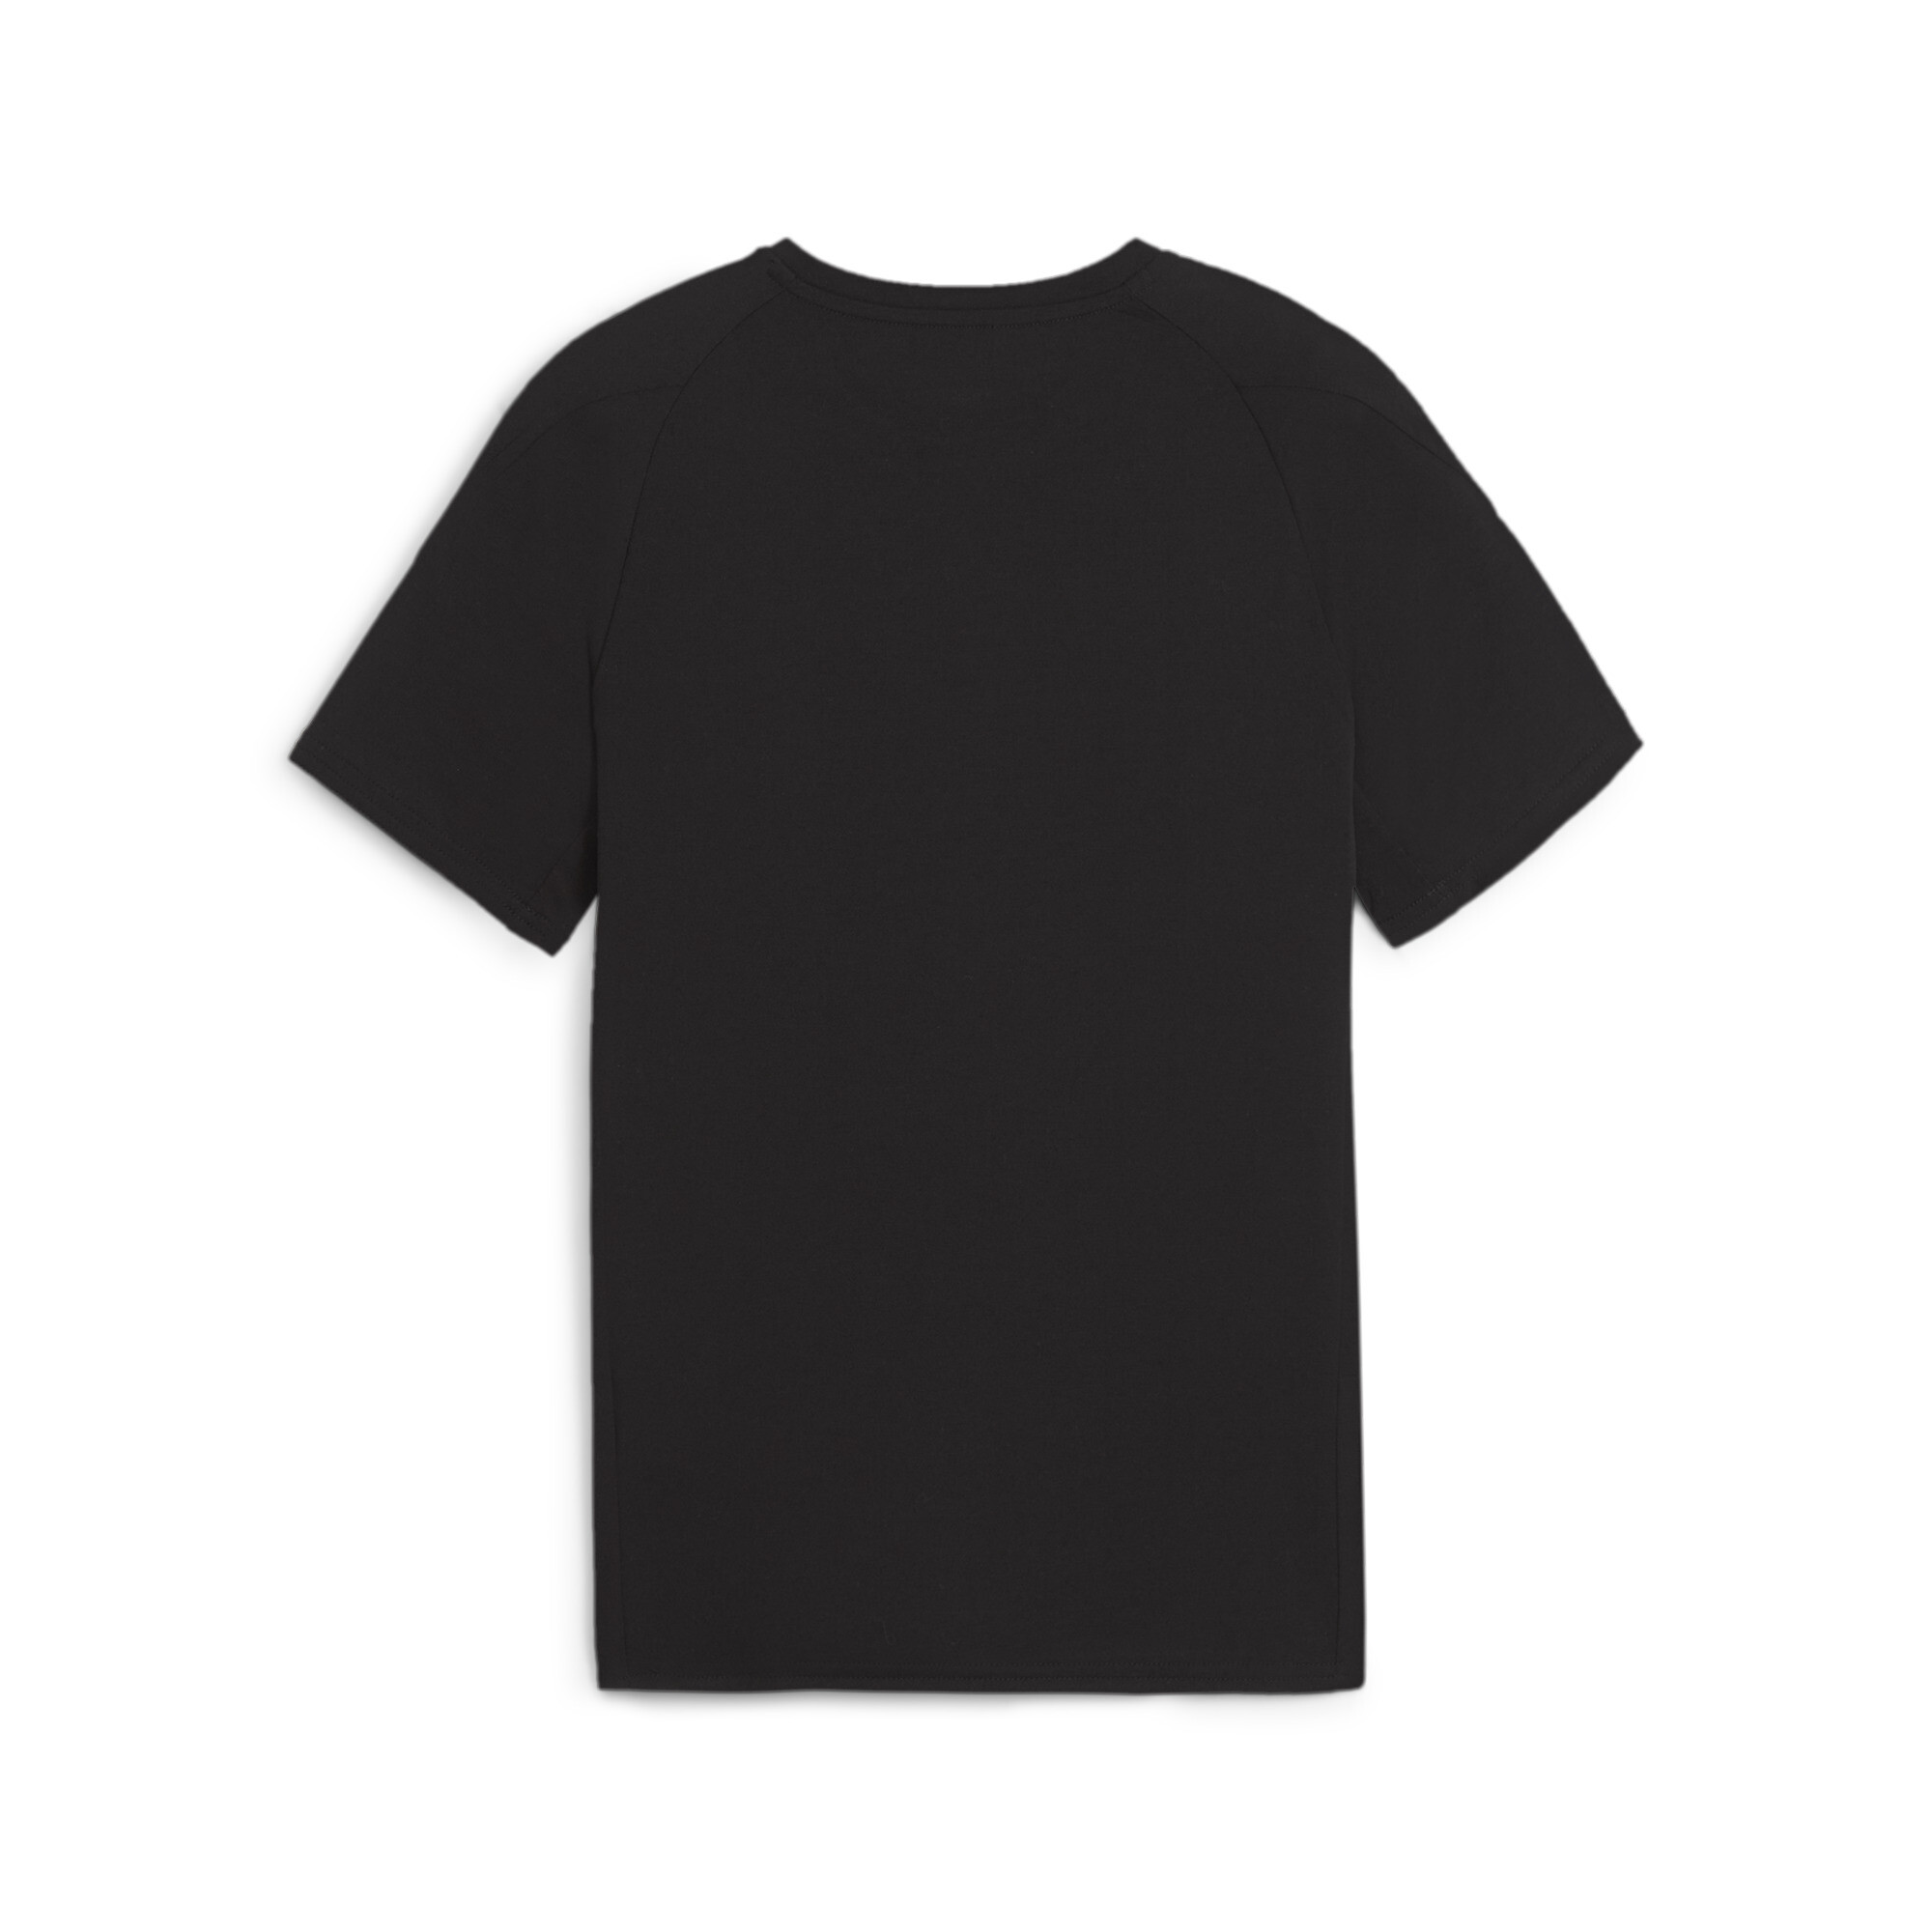 PUMA EVOSTRIPE T-Shirt In Black, Size 11-12 Youth